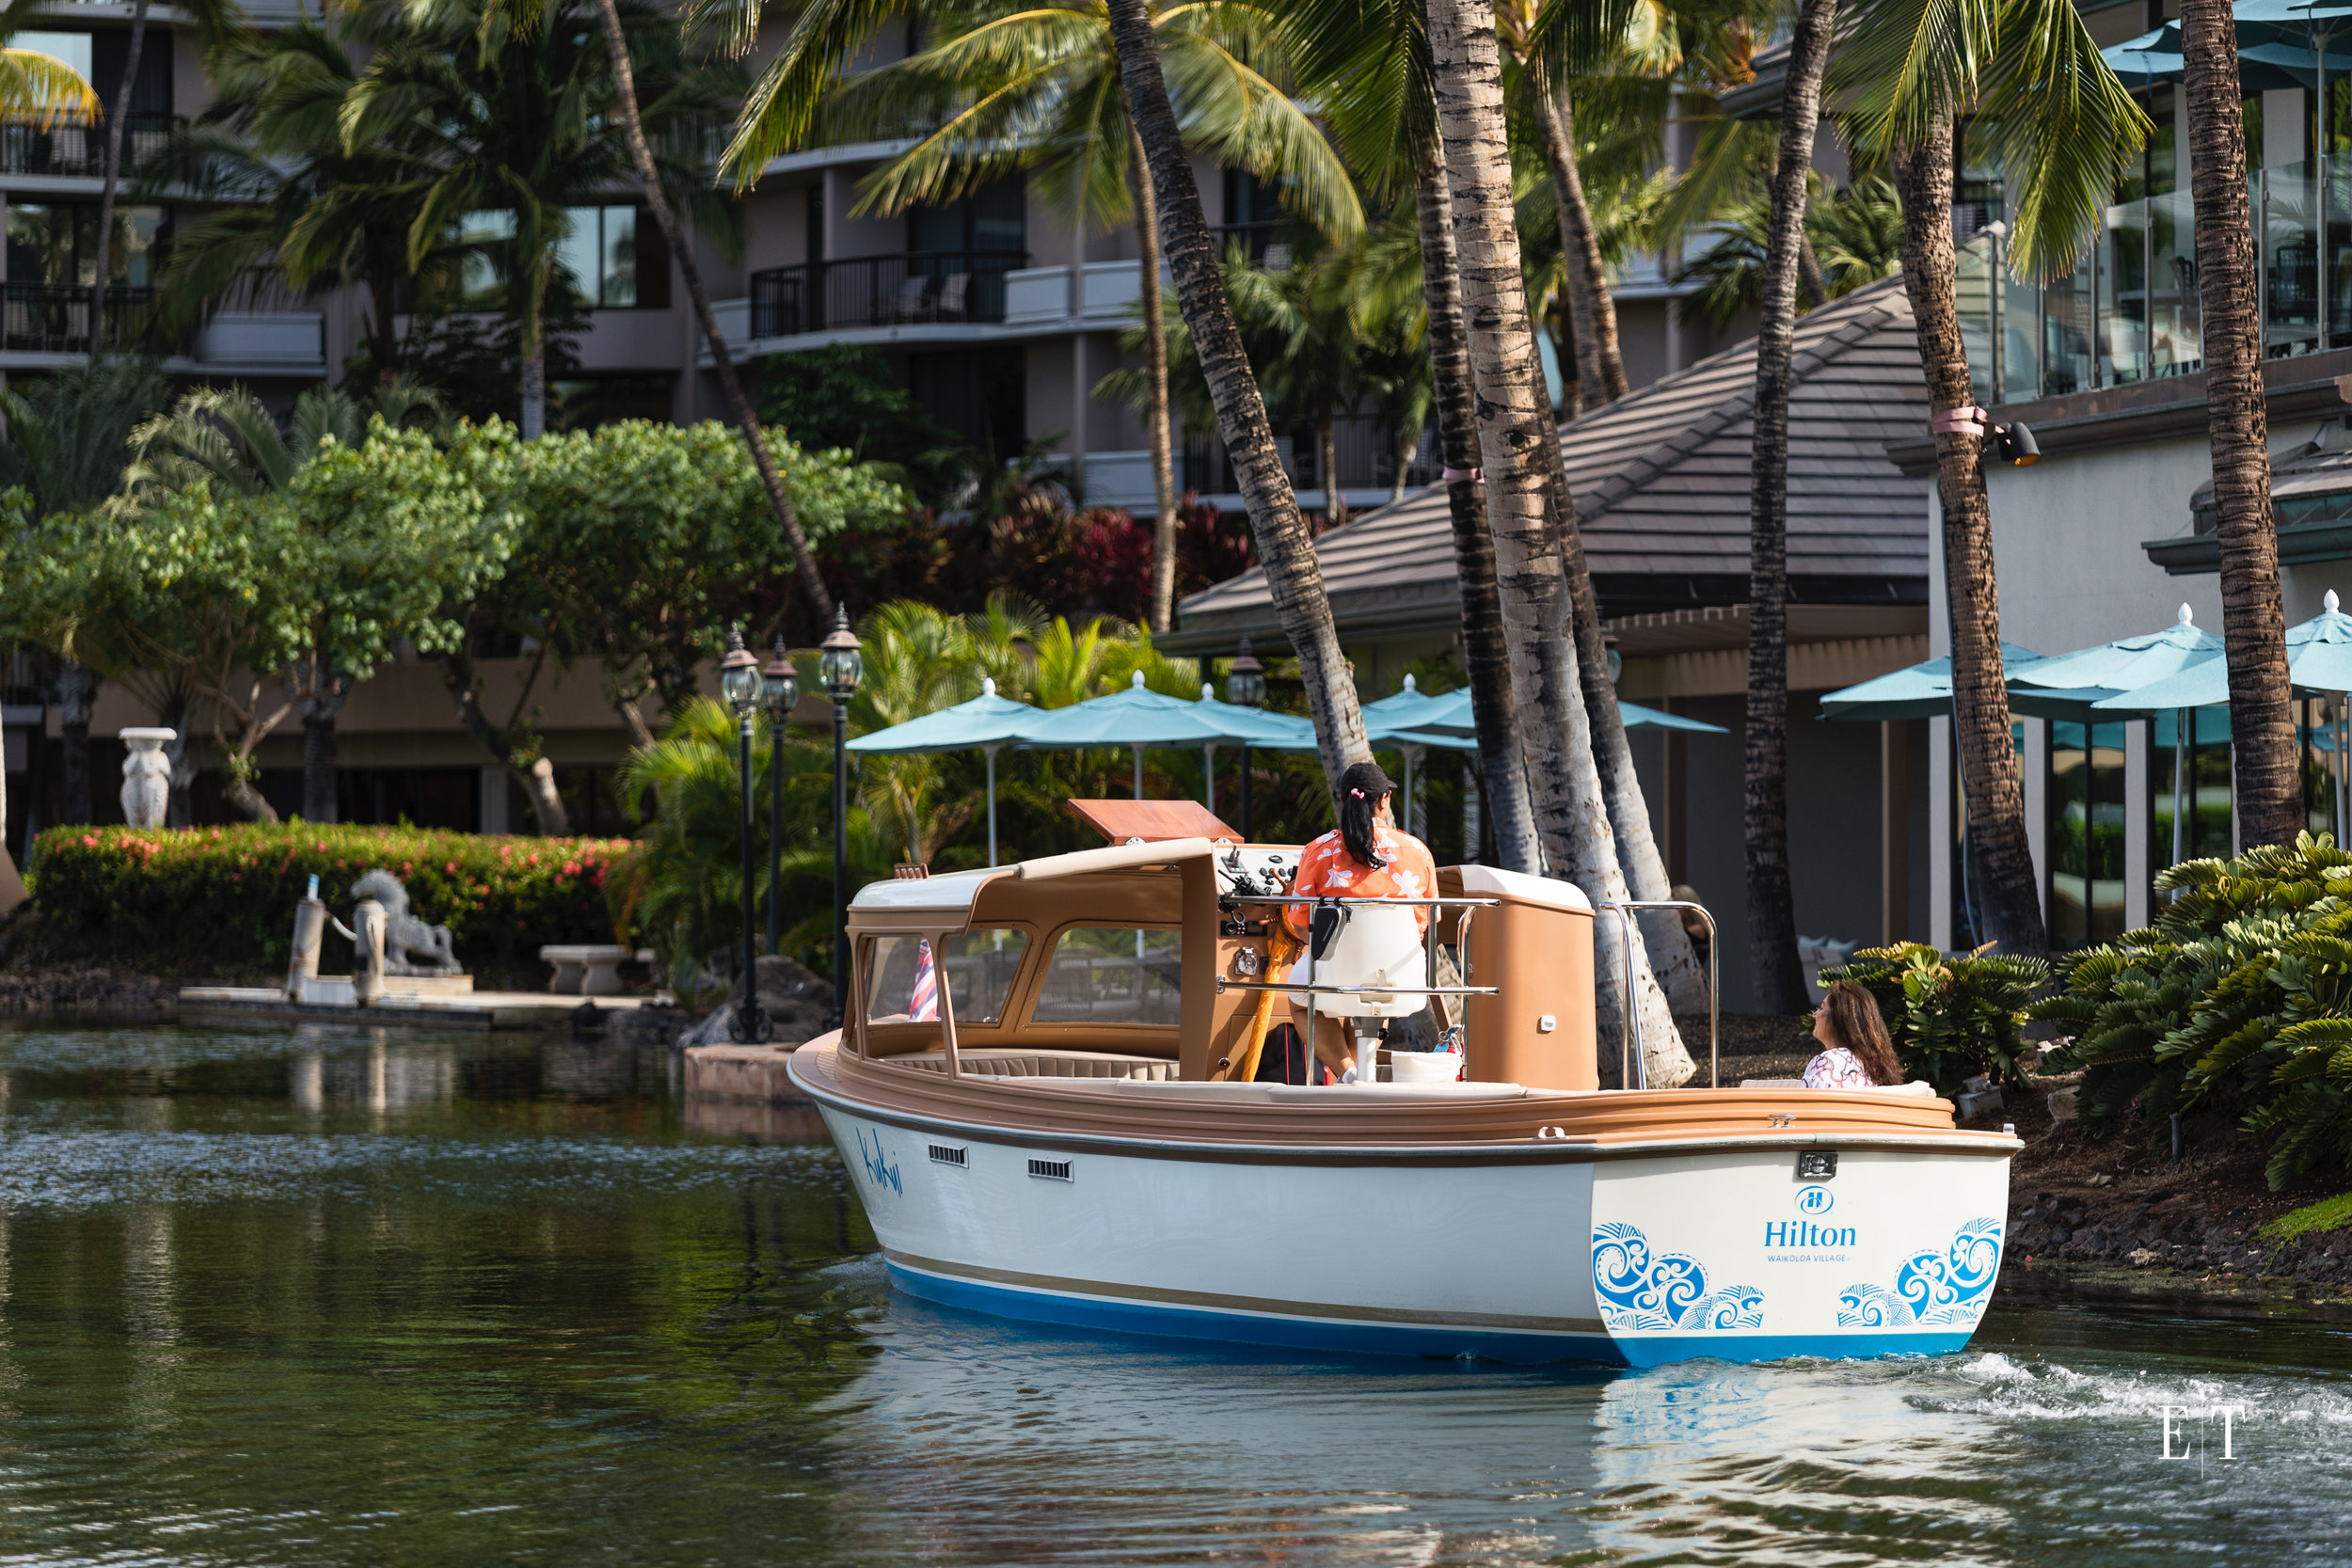 Hilton Waikoloa Village brand new electric boat